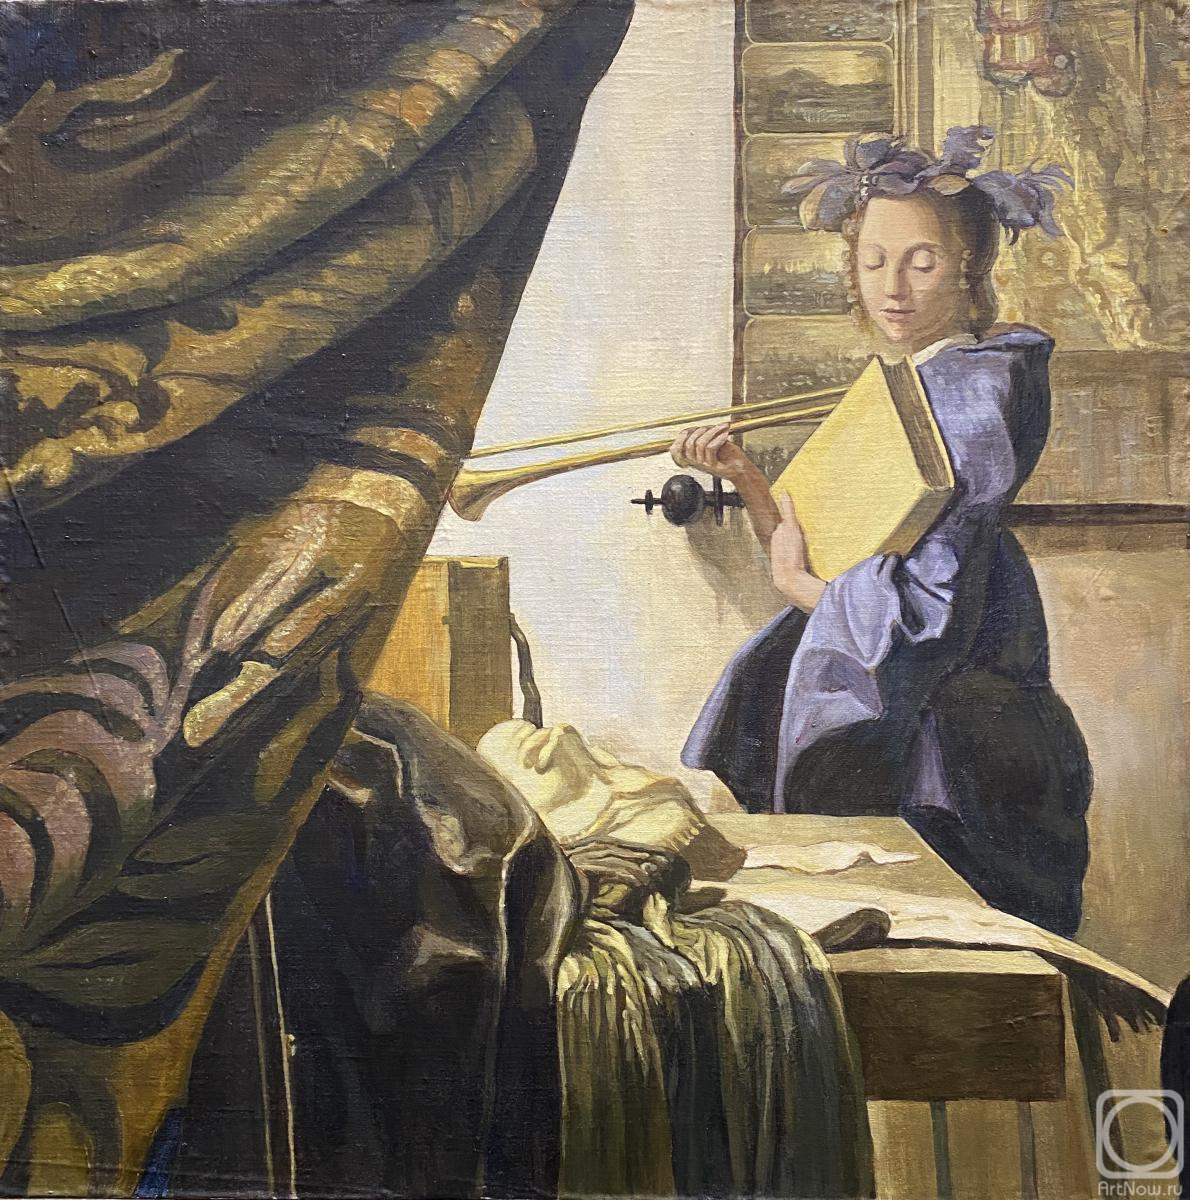 Kovylskikh Natalya. Jan Vermeer Delft. Copy of a fragment